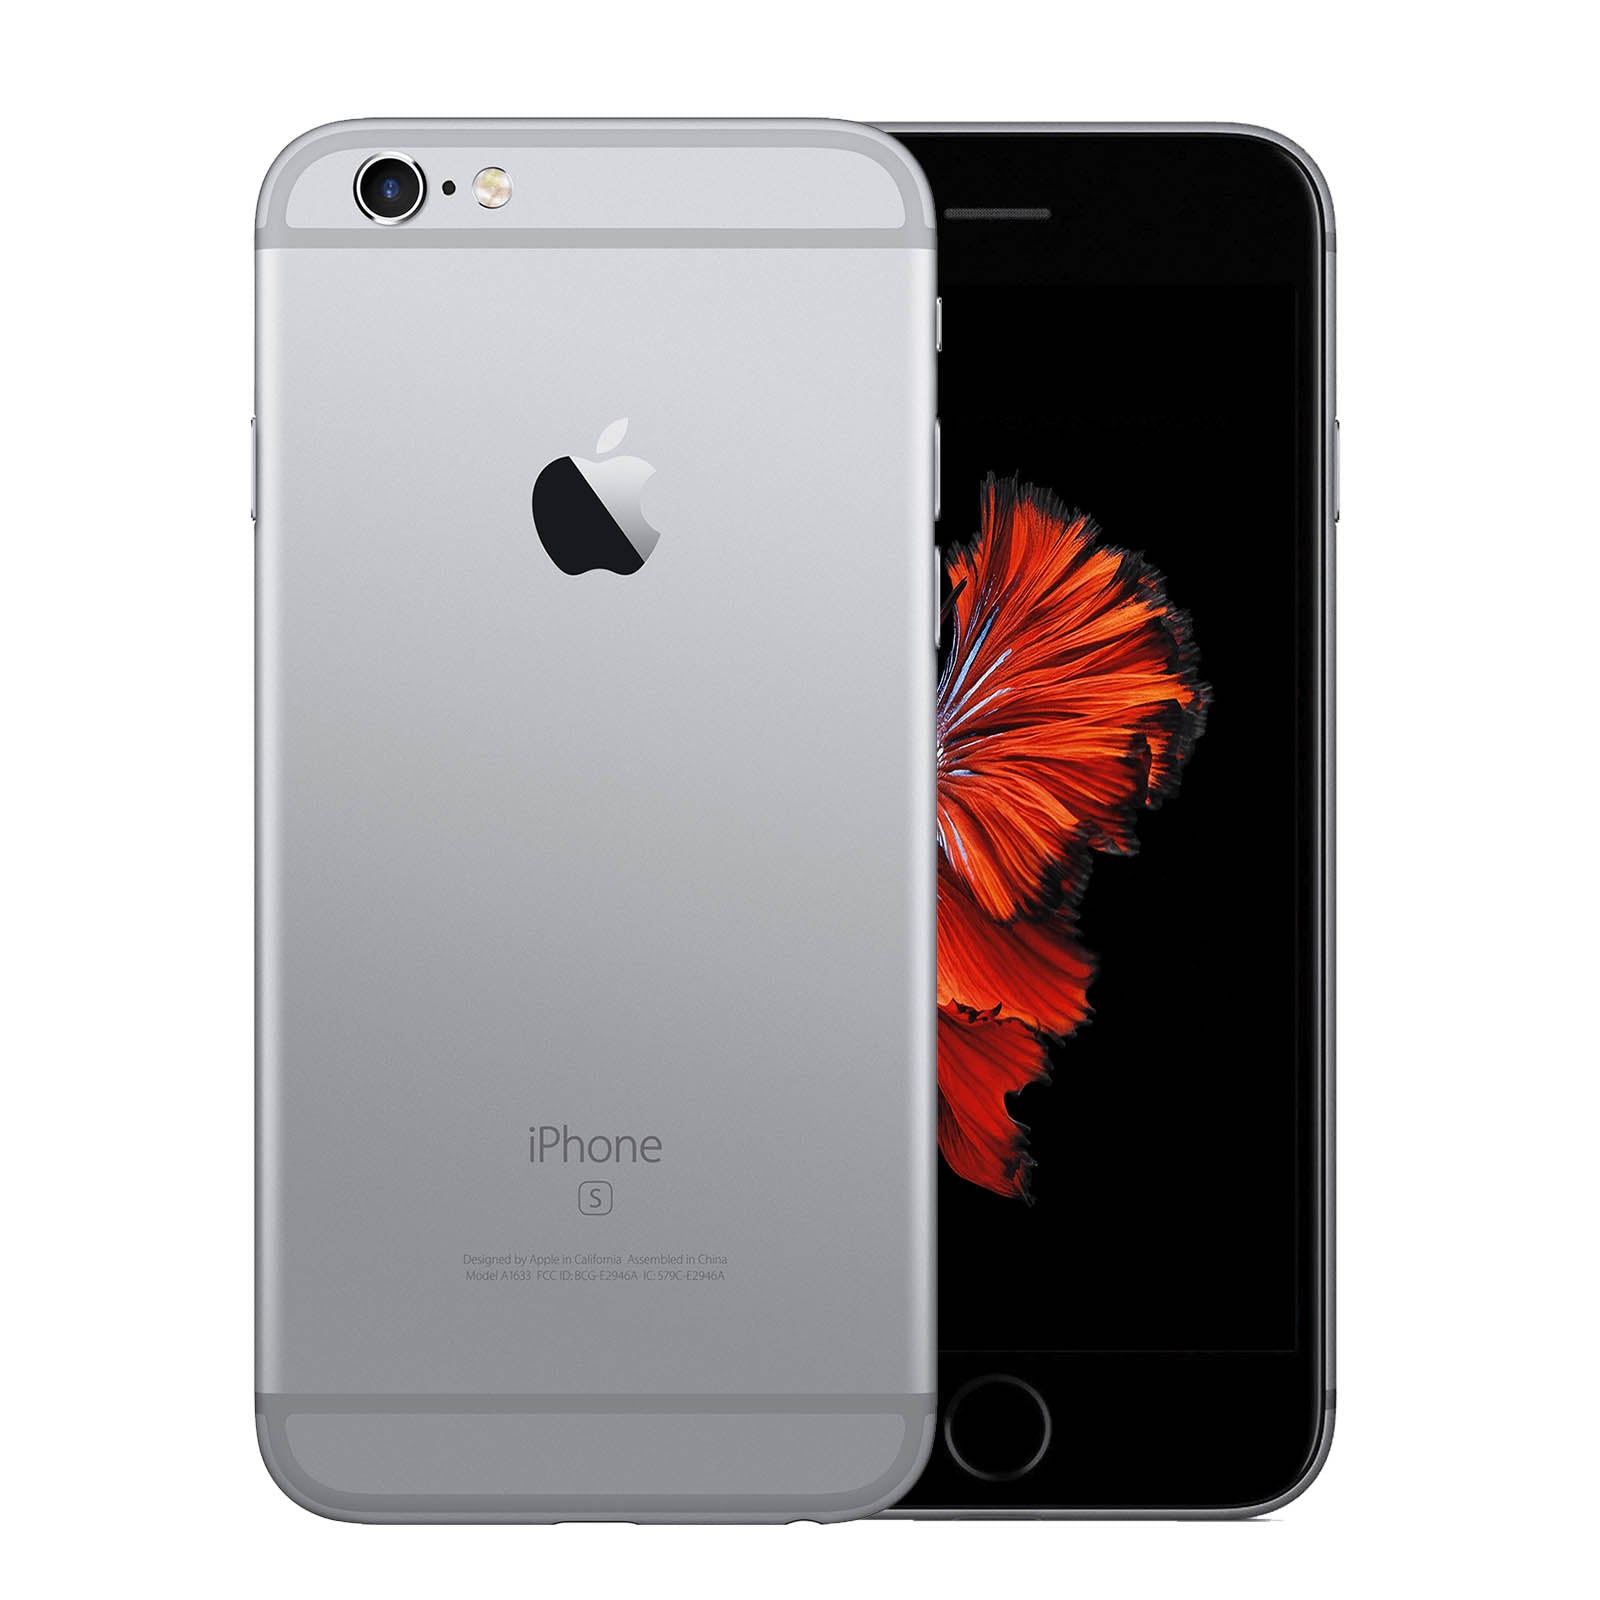 Apple iPhone 6S Plus 16GB Space Grey Good - Unlocked